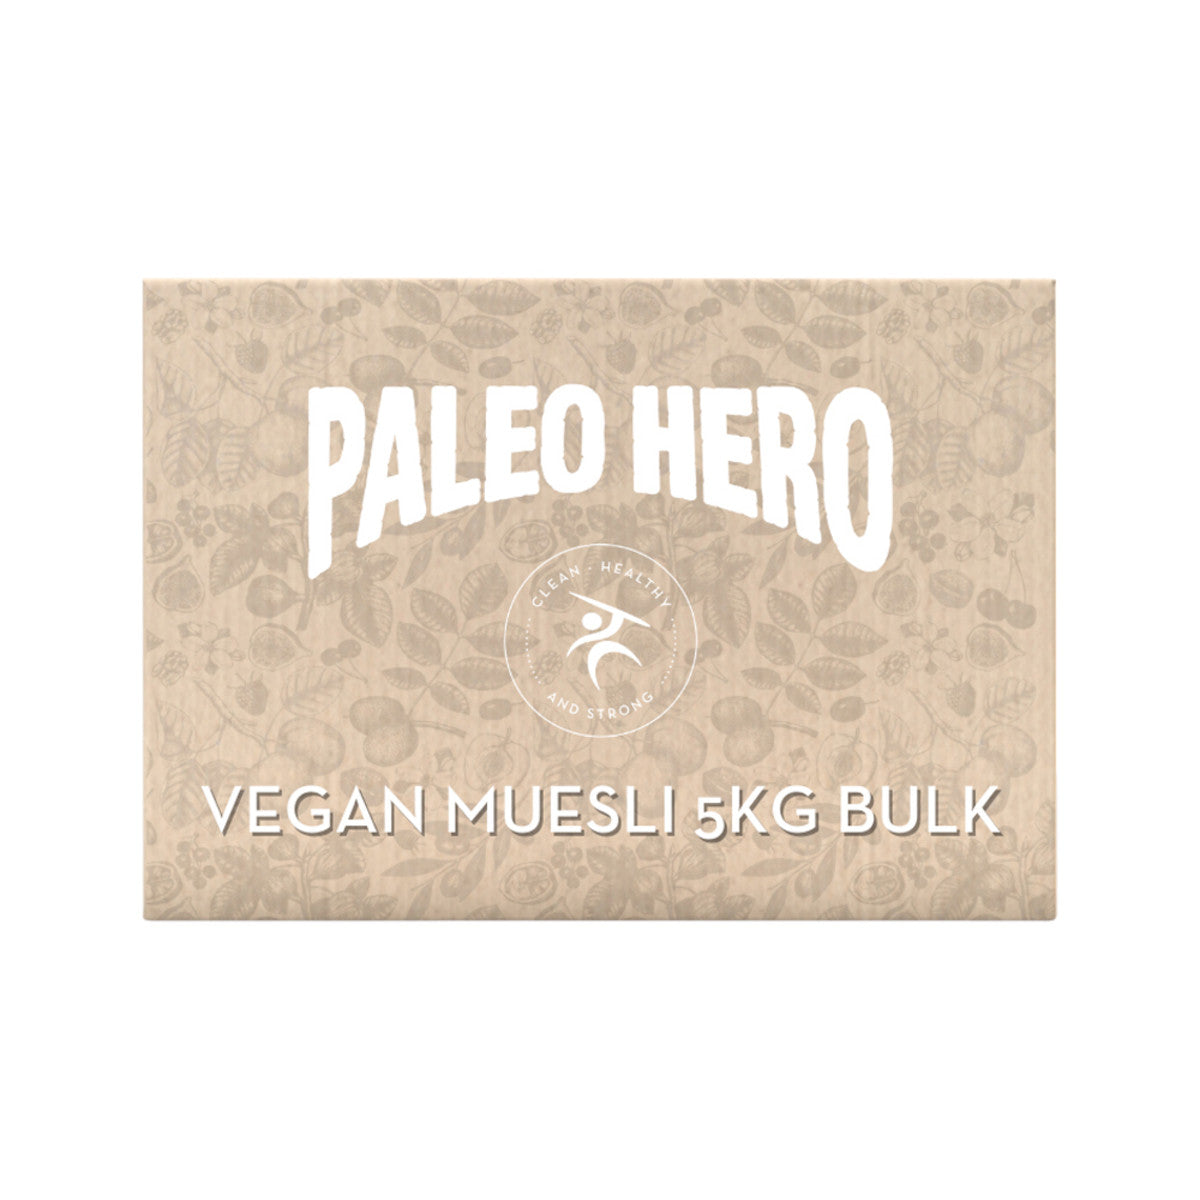 Paleo Hero Muesli Vegan Bulk 5kg